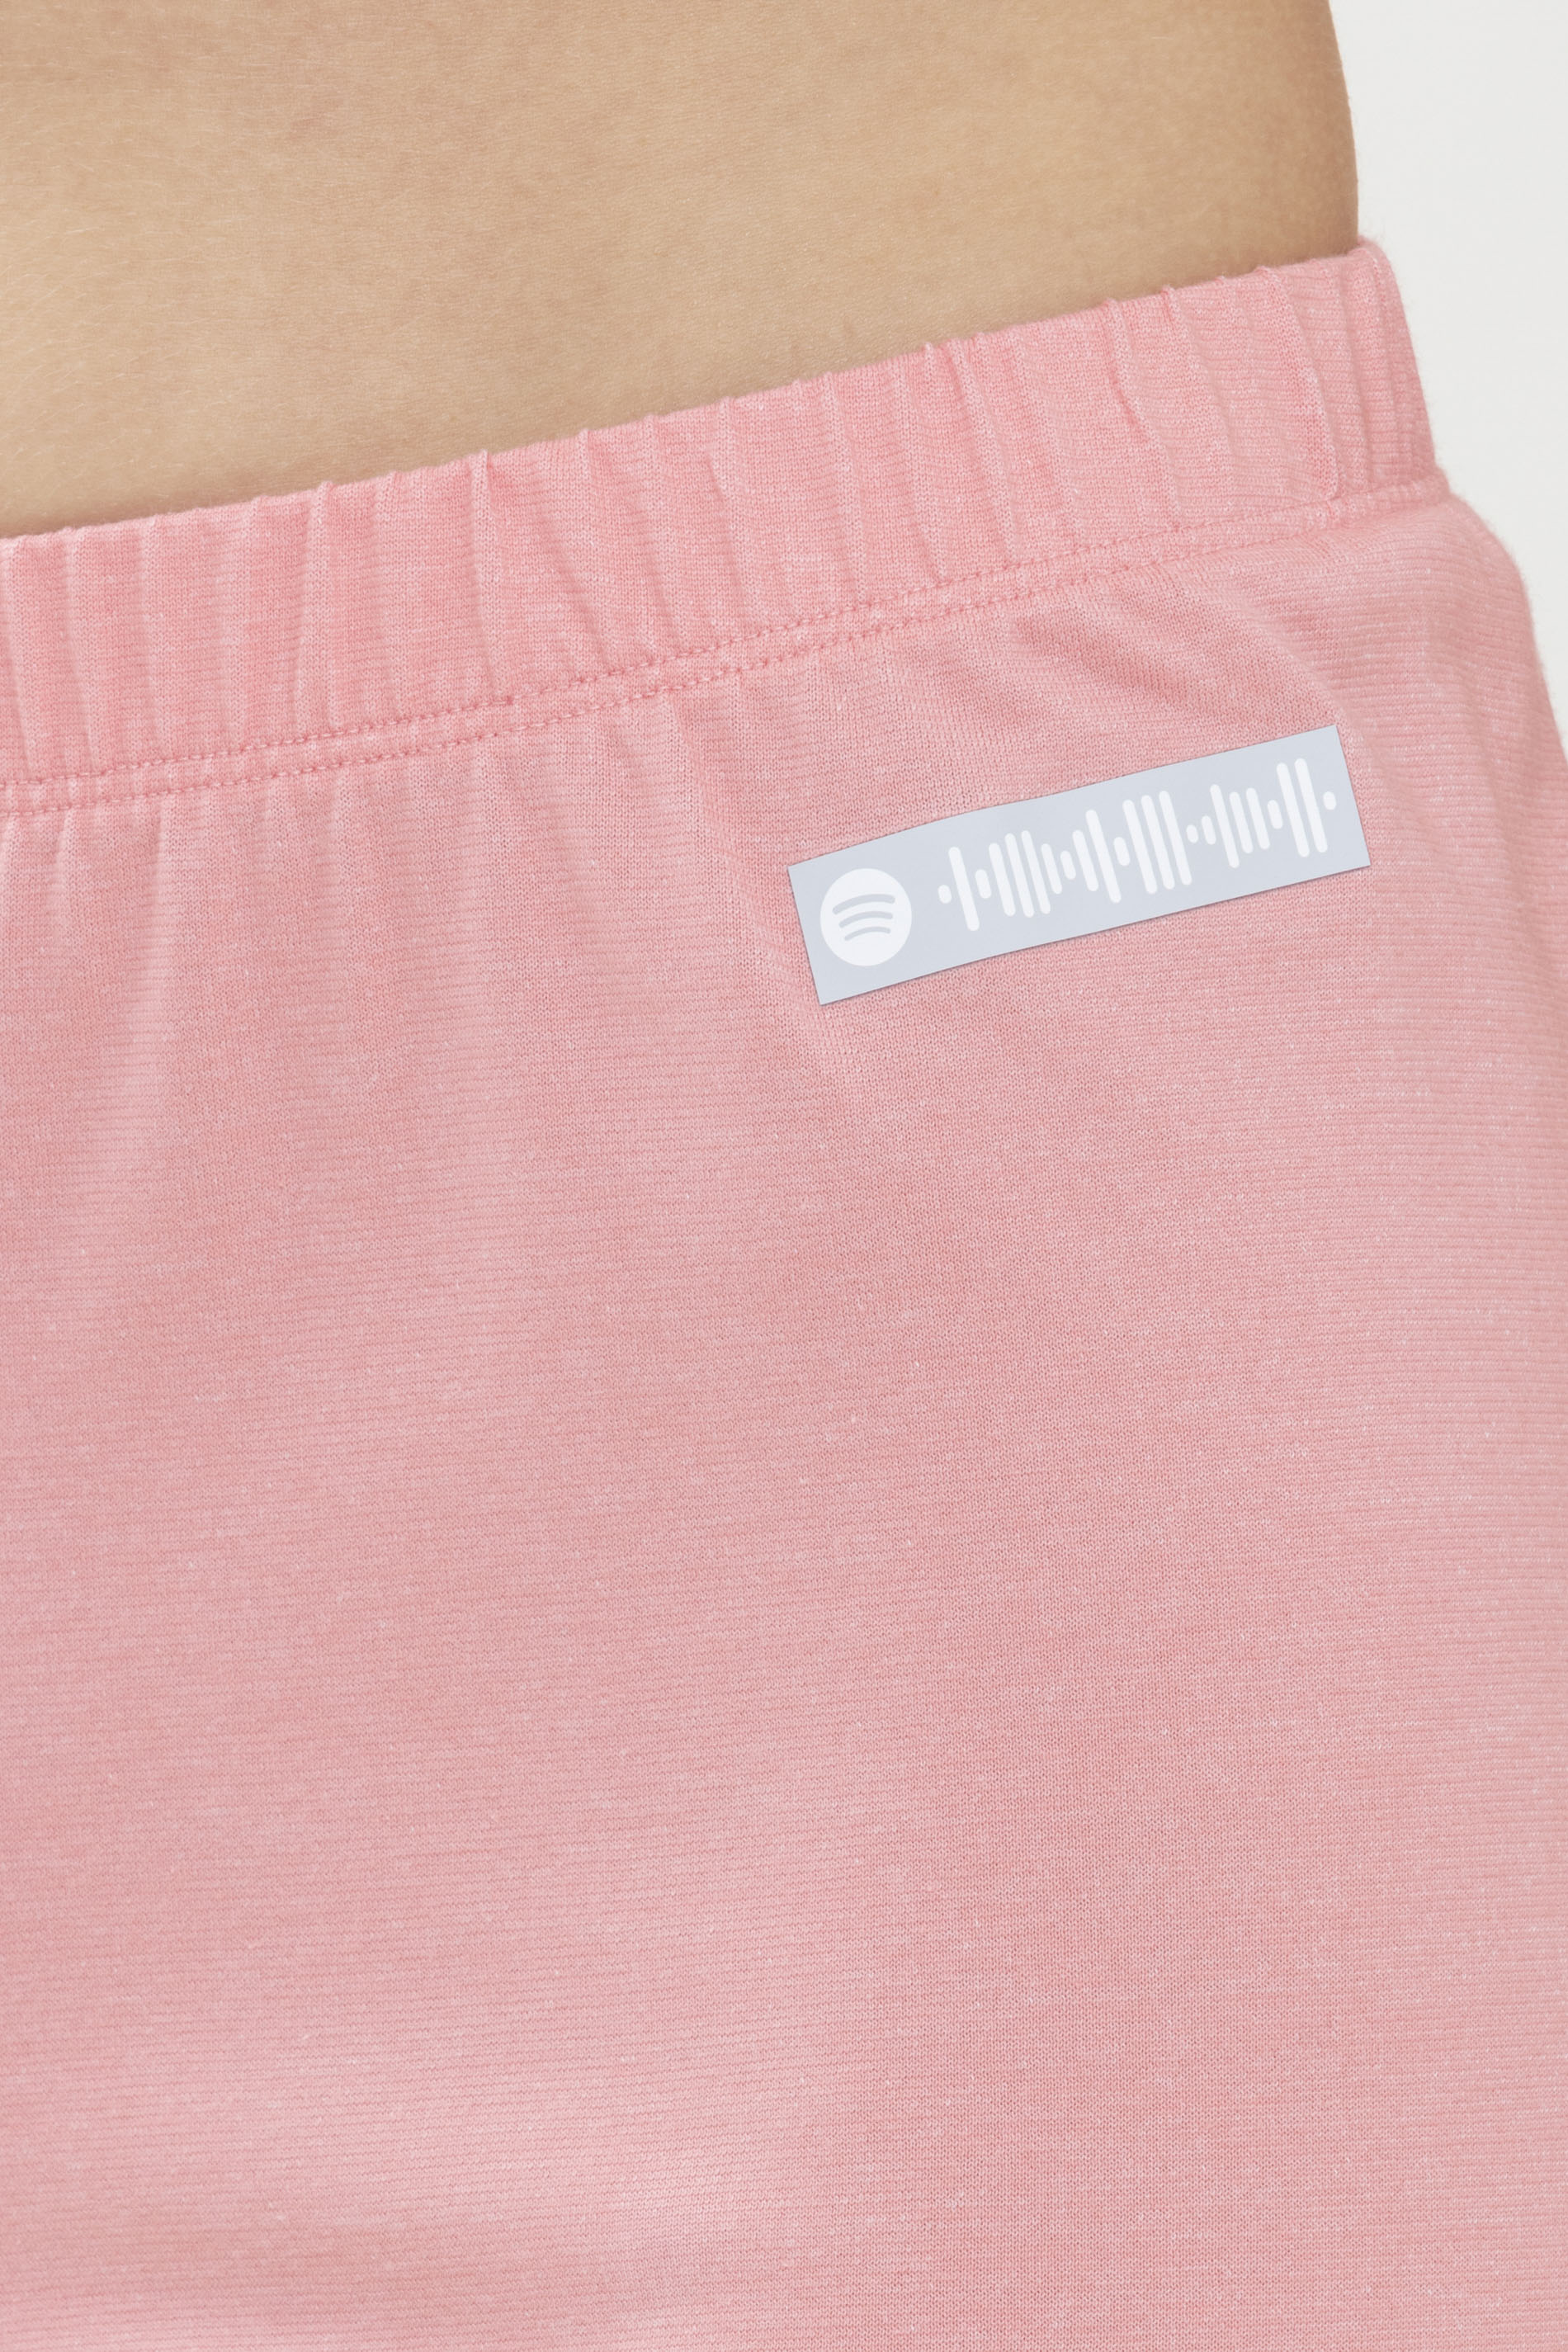 Trousers 3/4-length Powder Pink Serie Zzzleepwear Detail View 01 | mey®